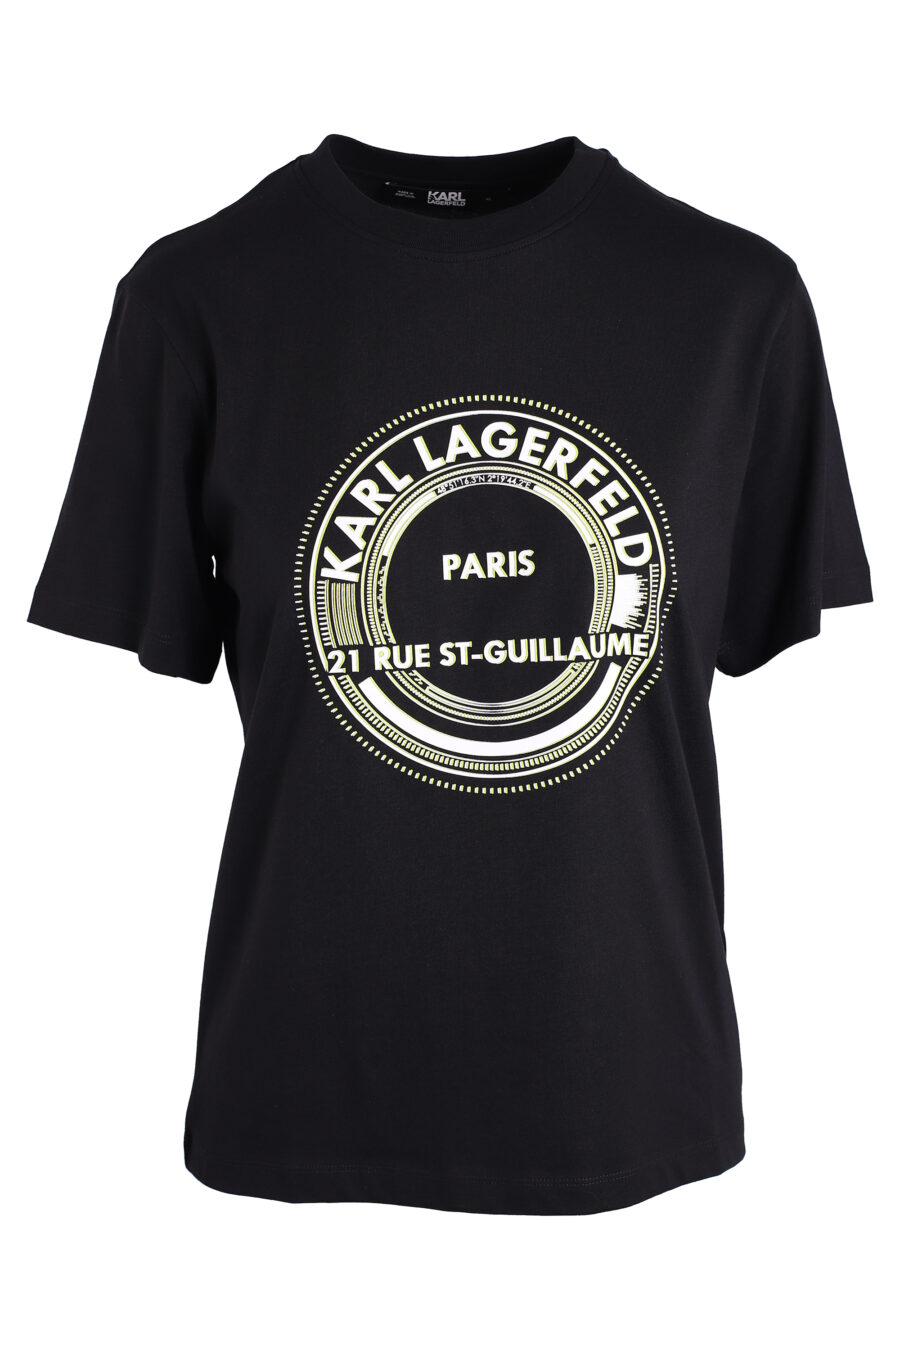 Camiseta negra con logo redondo blanco y verde "paris" - IMG 3356